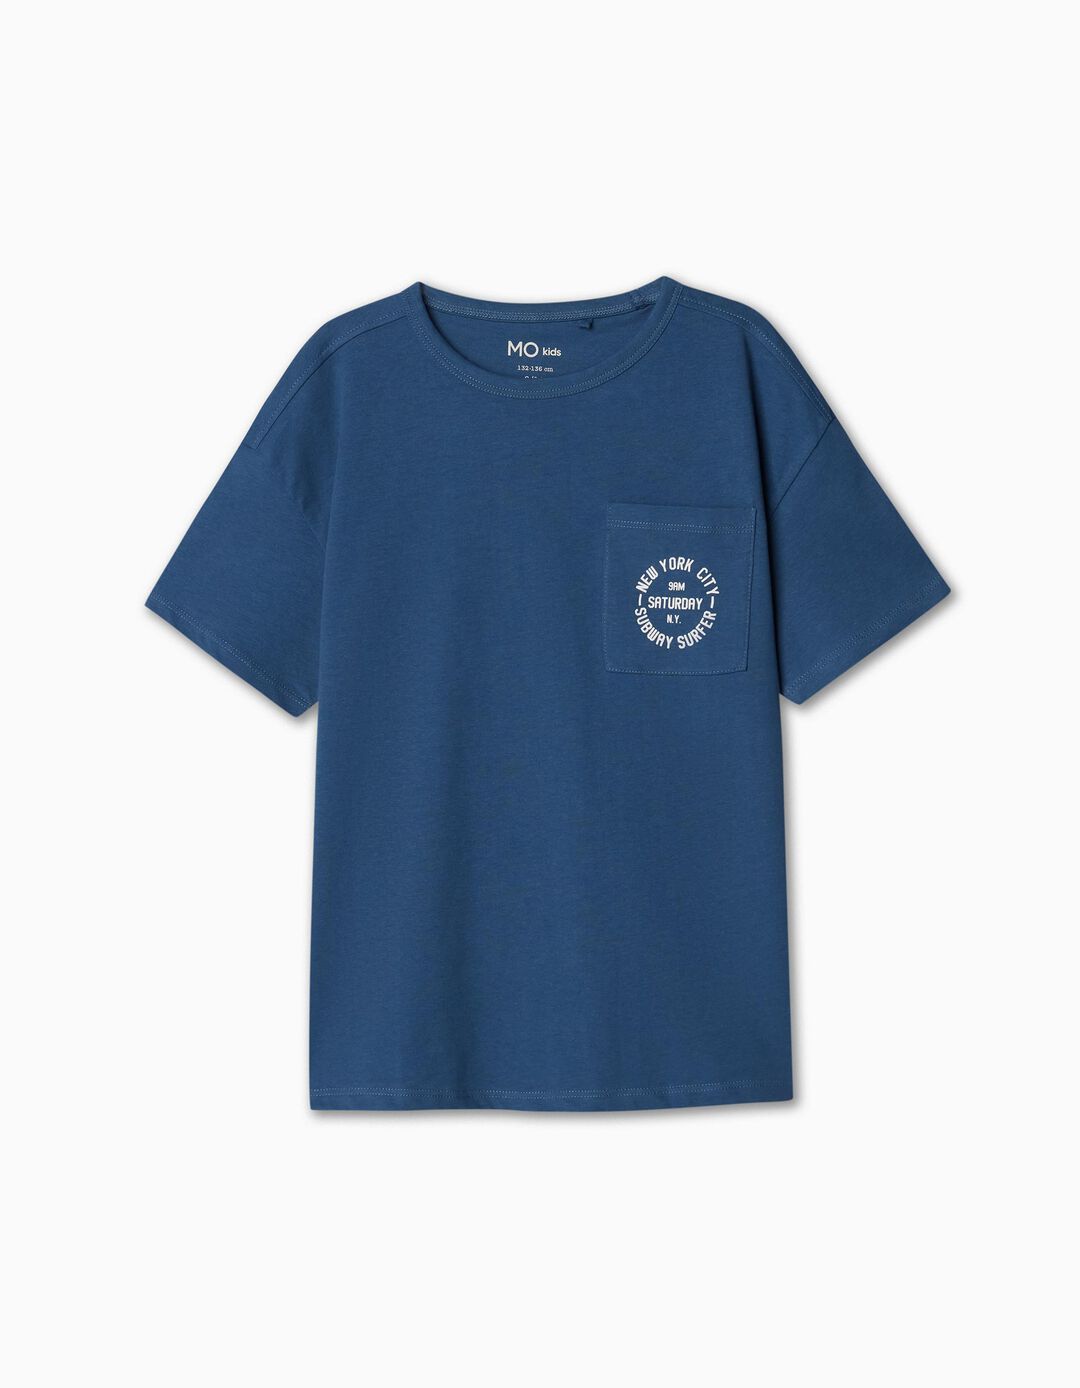 T-shirt Estampado, Menino, Azul